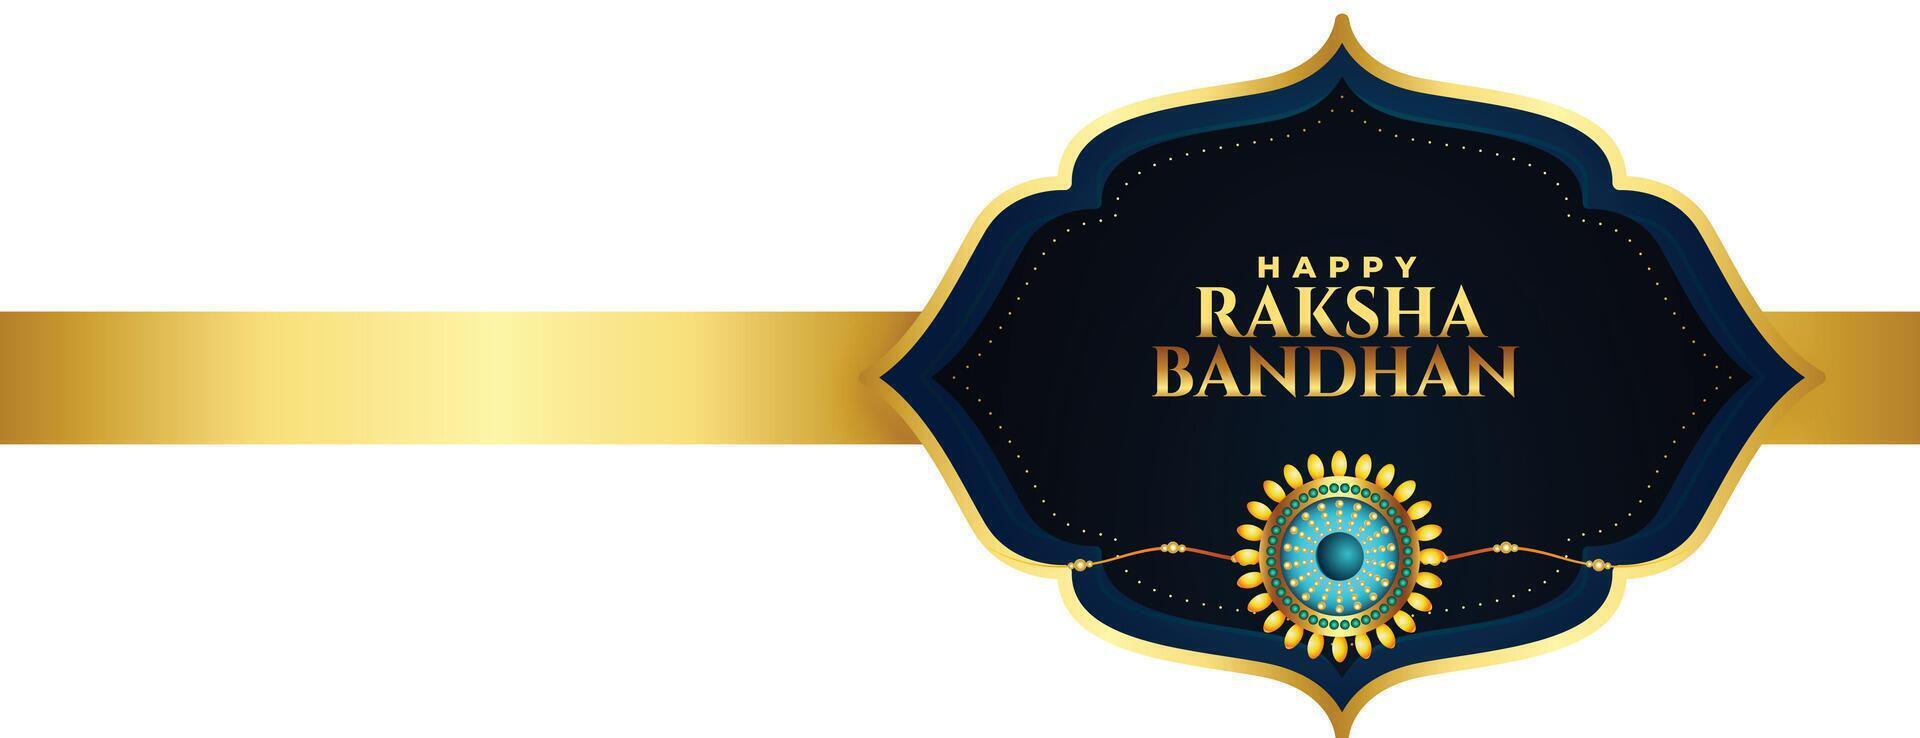 gelukkig raksha bandhan festival banier gouden ontwerp vector